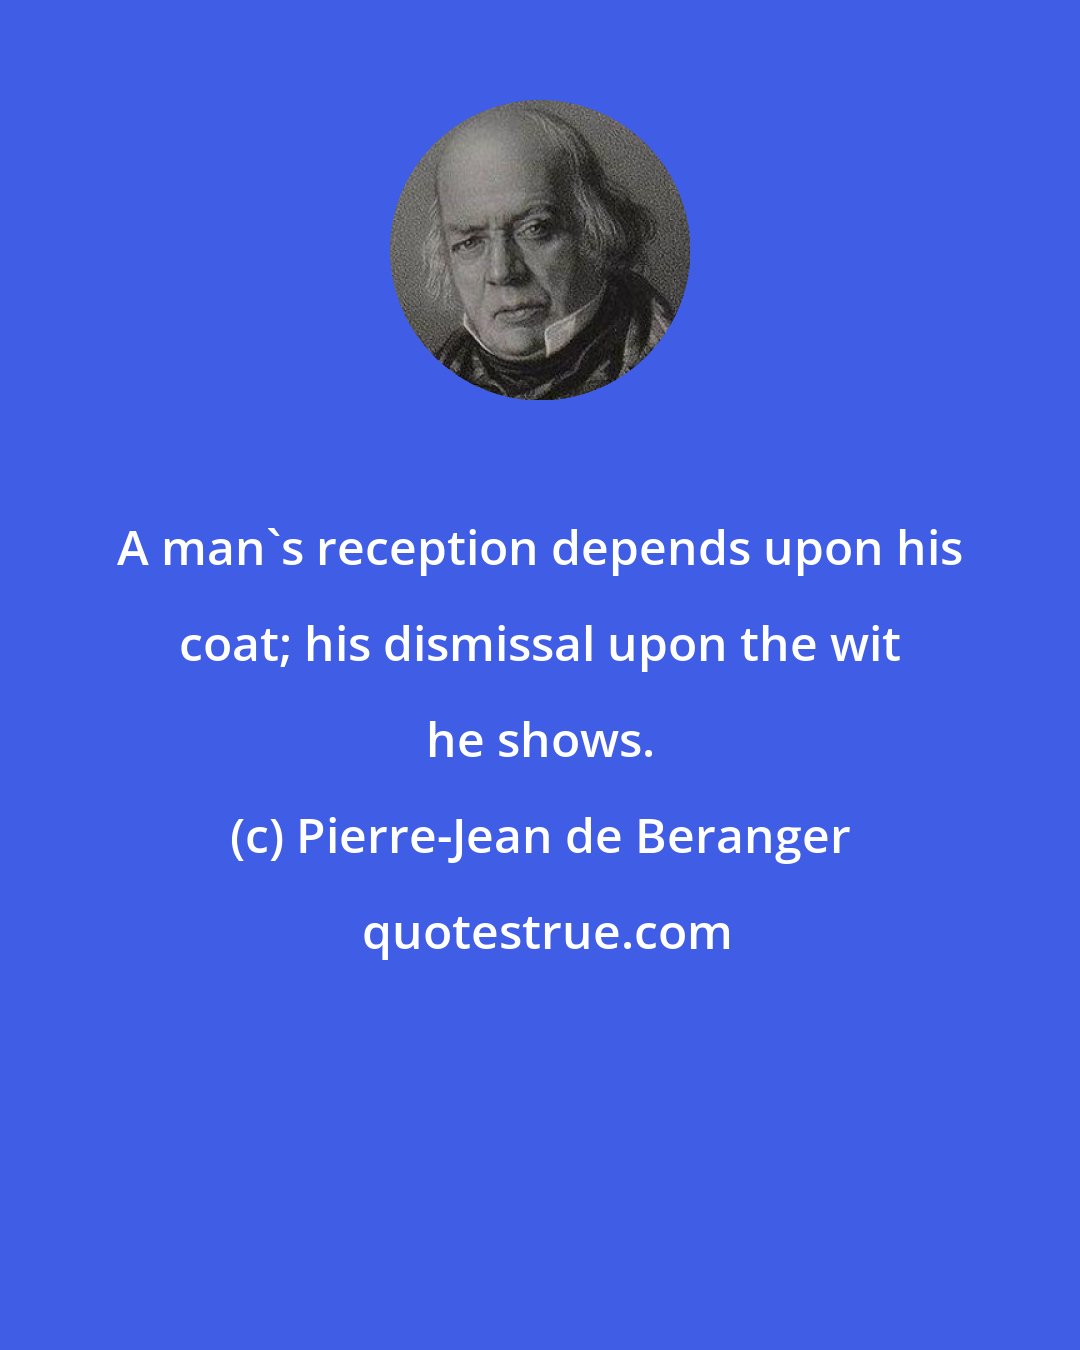 Pierre-Jean de Beranger: A man's reception depends upon his coat; his dismissal upon the wit he shows.